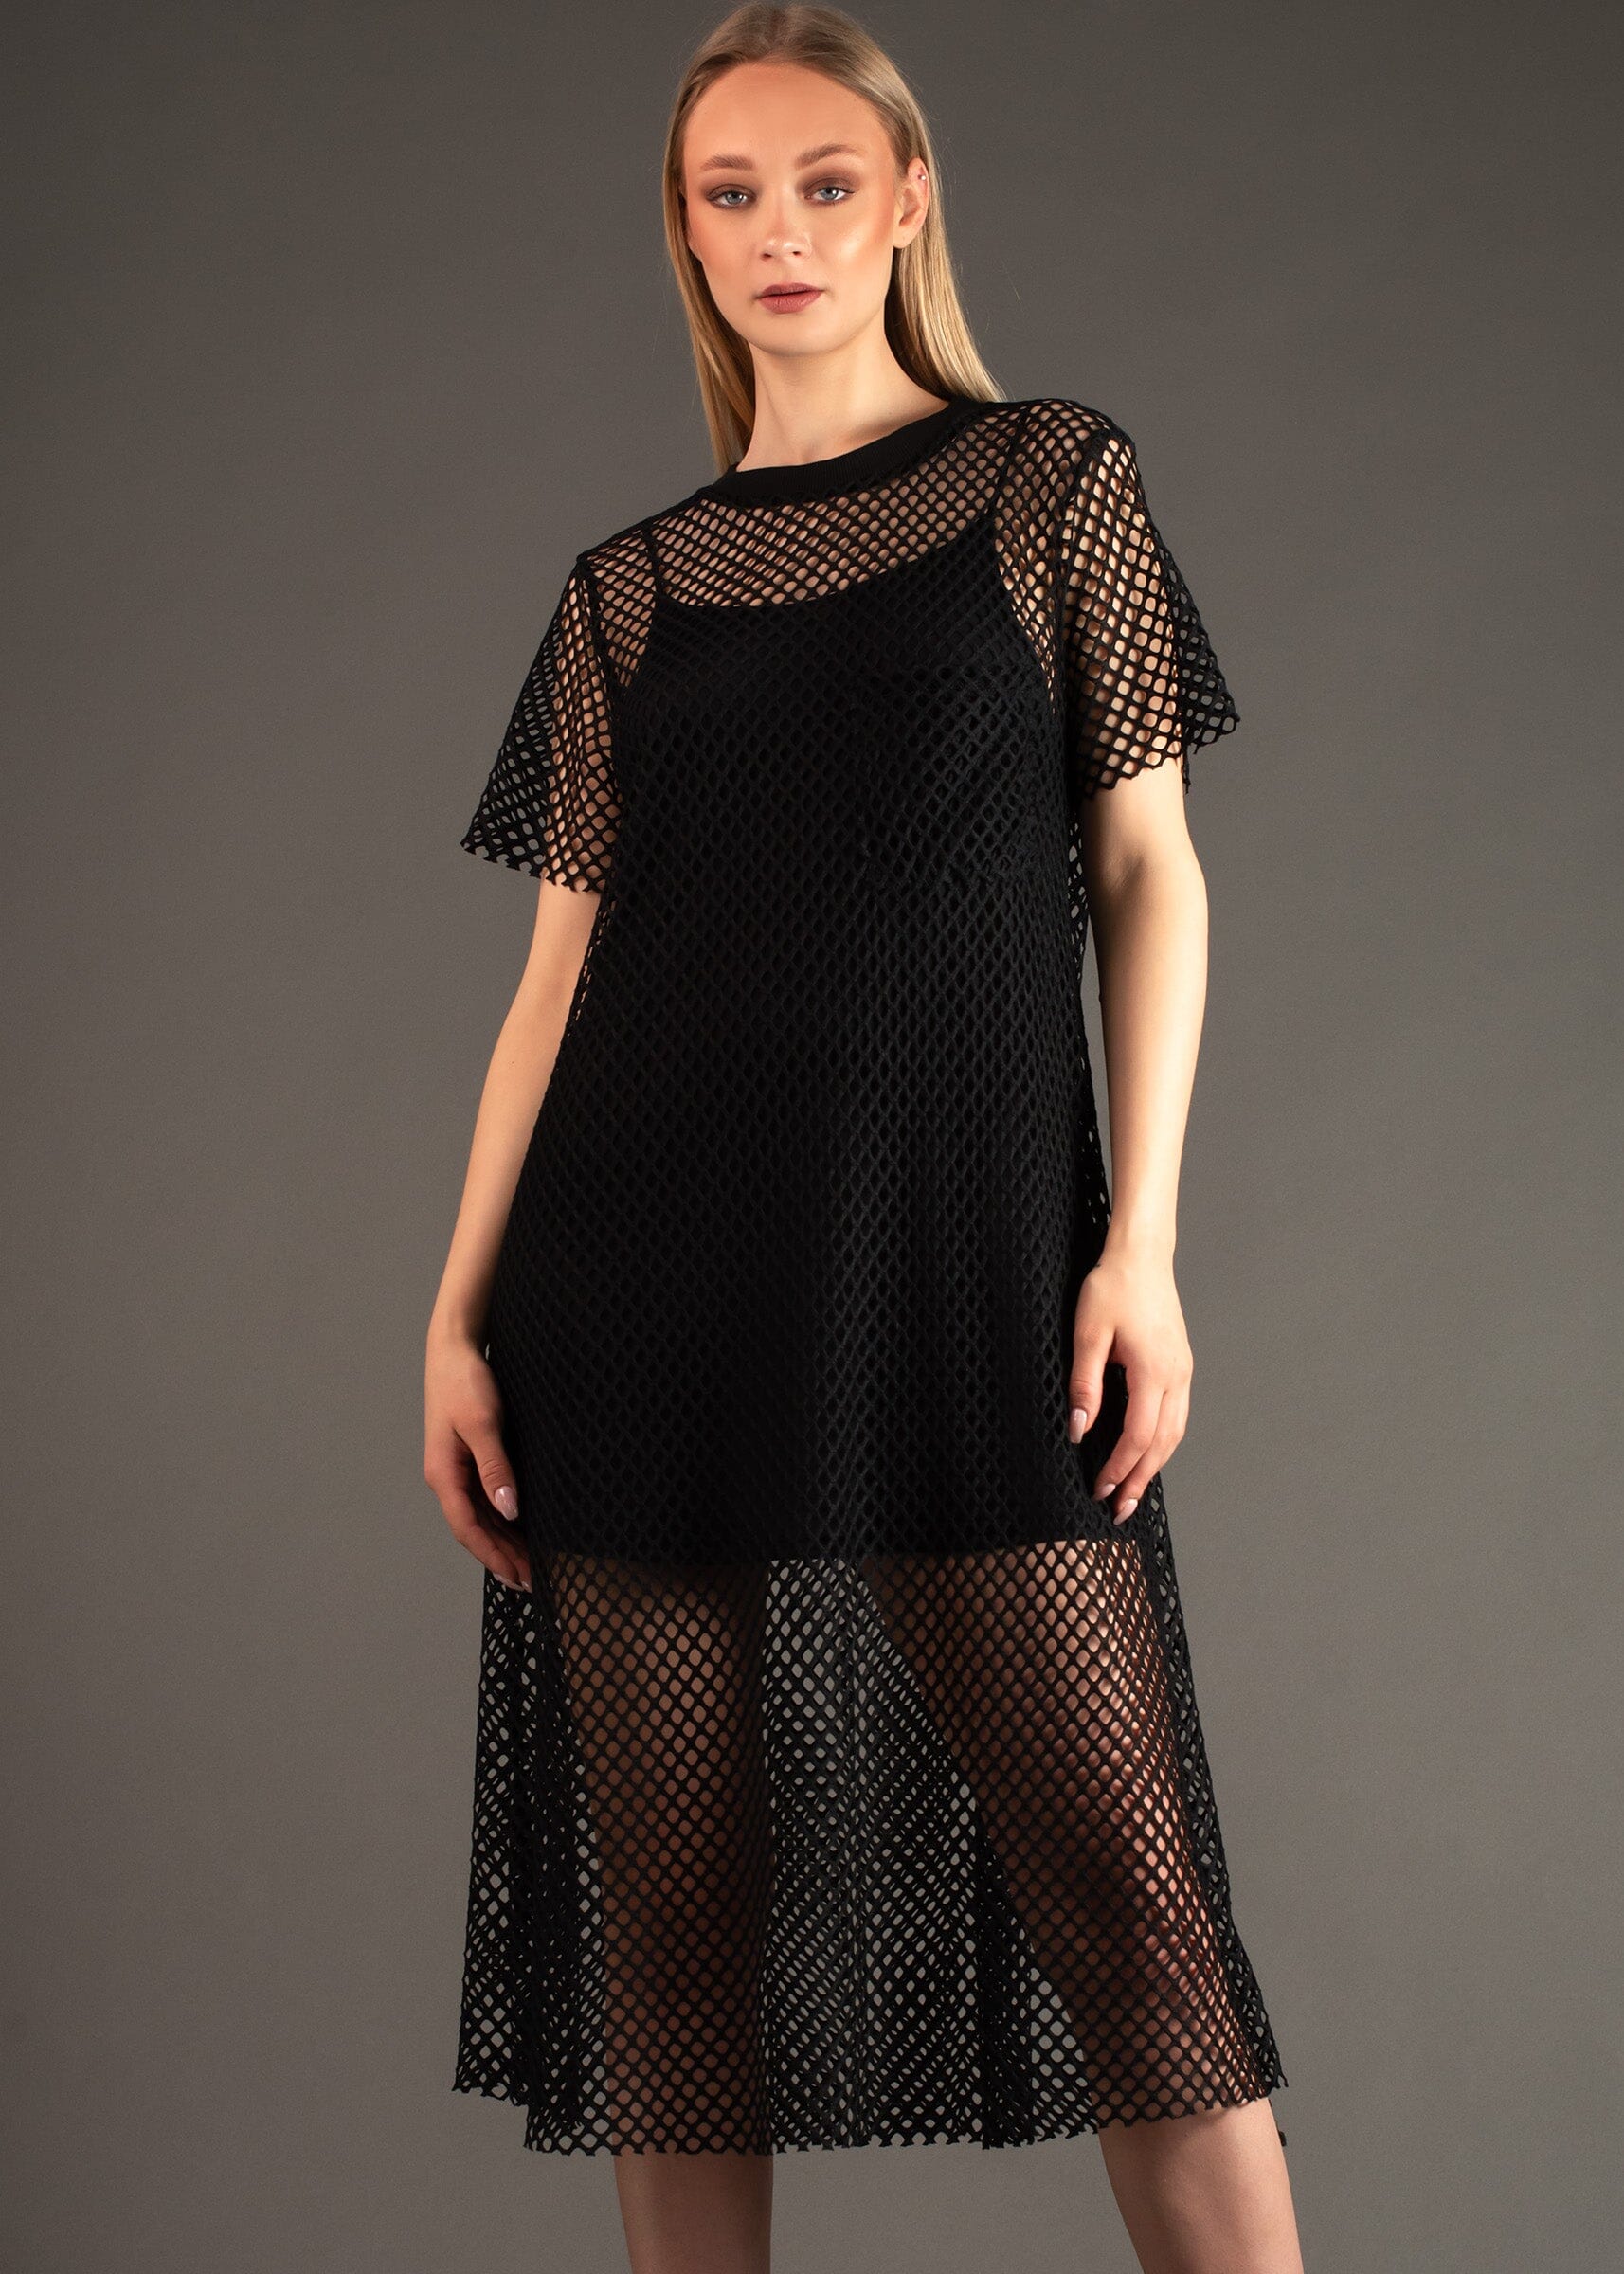 Fishnet Dress Dresses Kate Hewko 